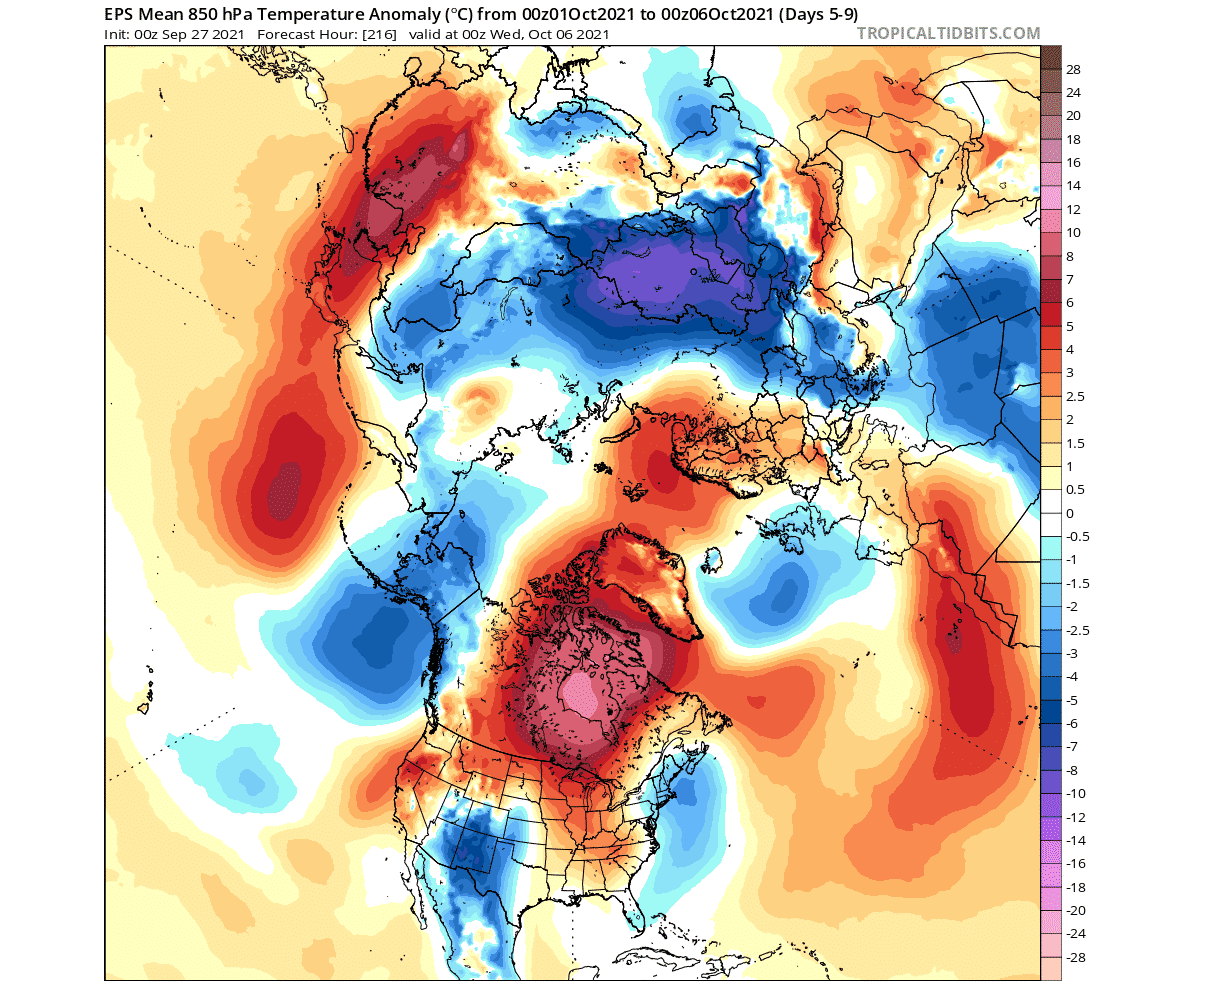 north-hemisphere-ecmwf-temperature-forecast-october-week-1